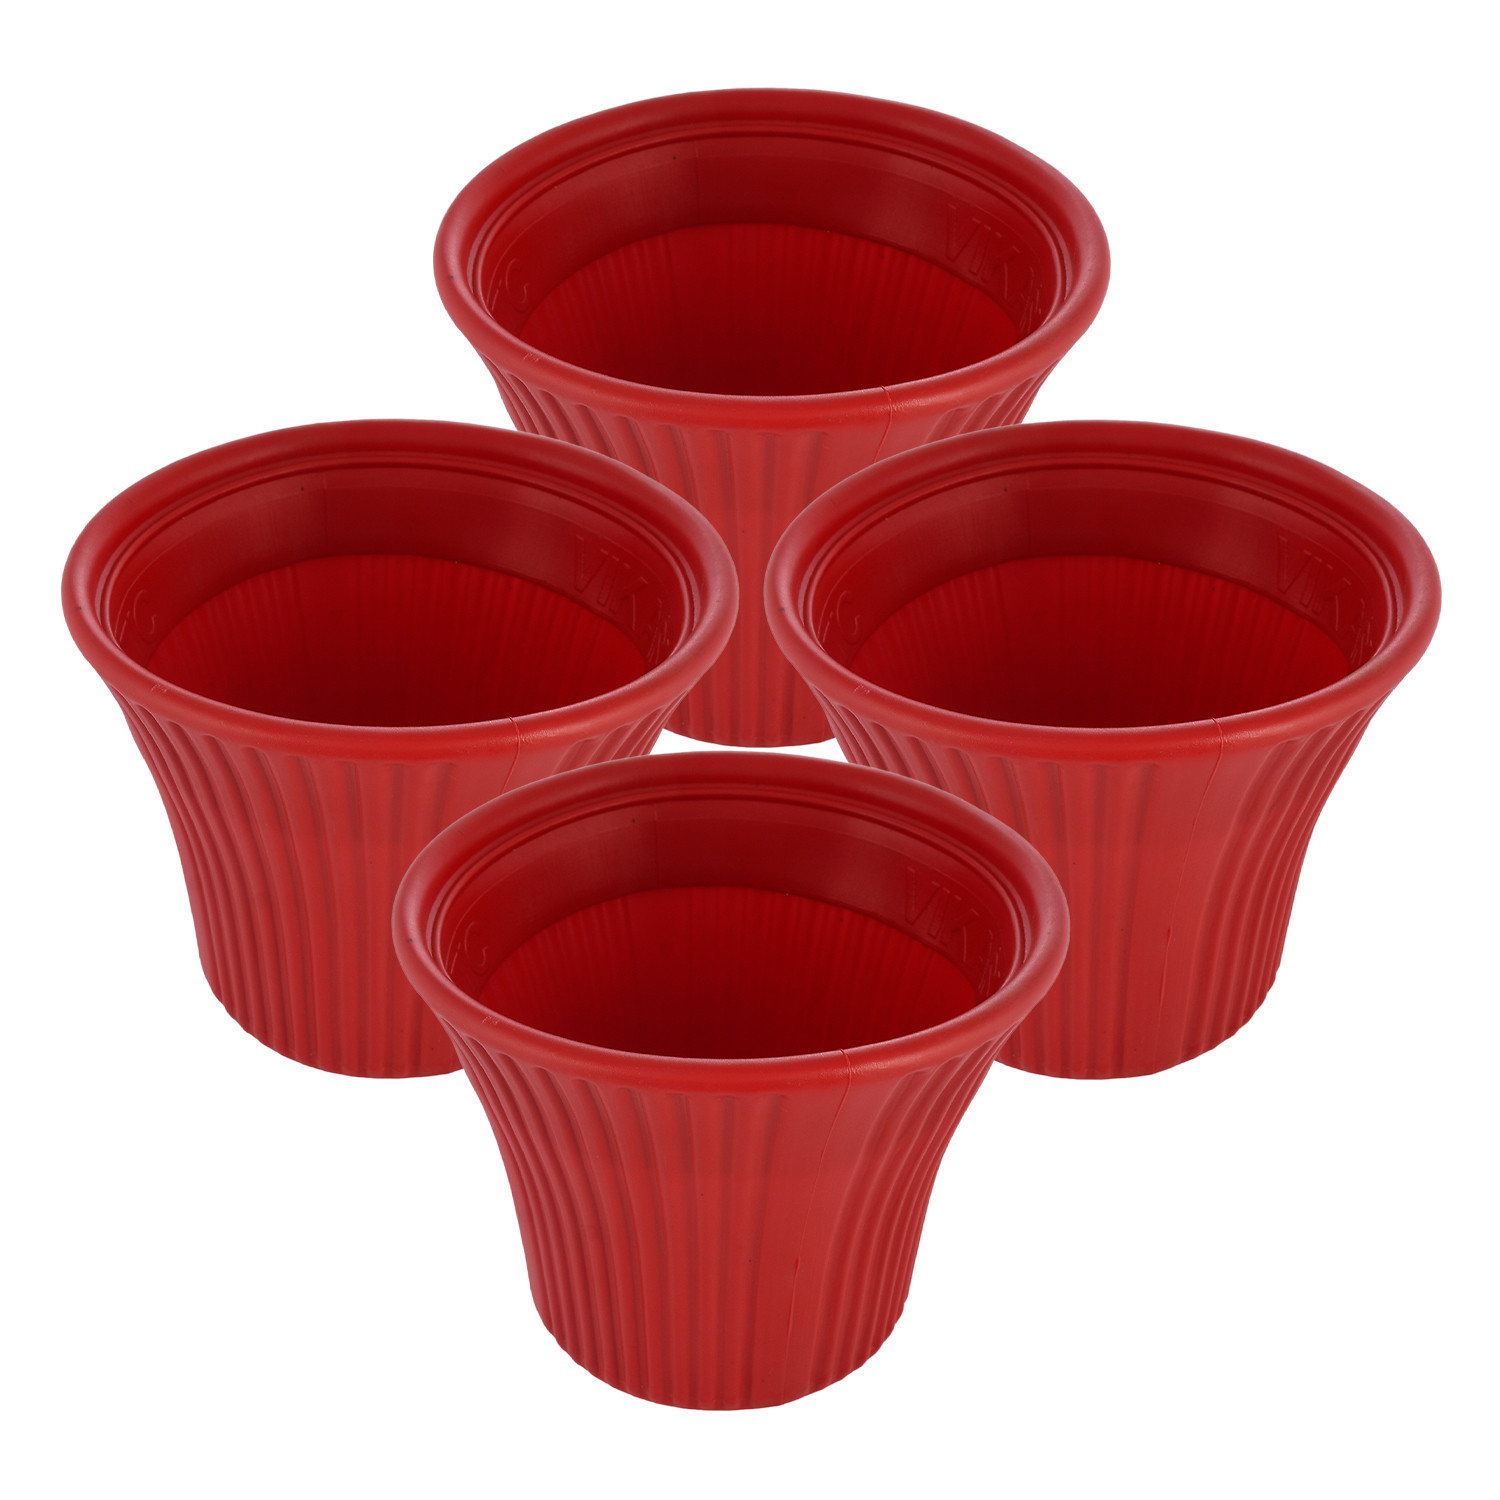 Kuber Industries Sunshine Flower Pot|Durable Plastic Flower Pots|Planters for Home Décor|Garden|Living Room|Balcony|8 Inch|(Red)